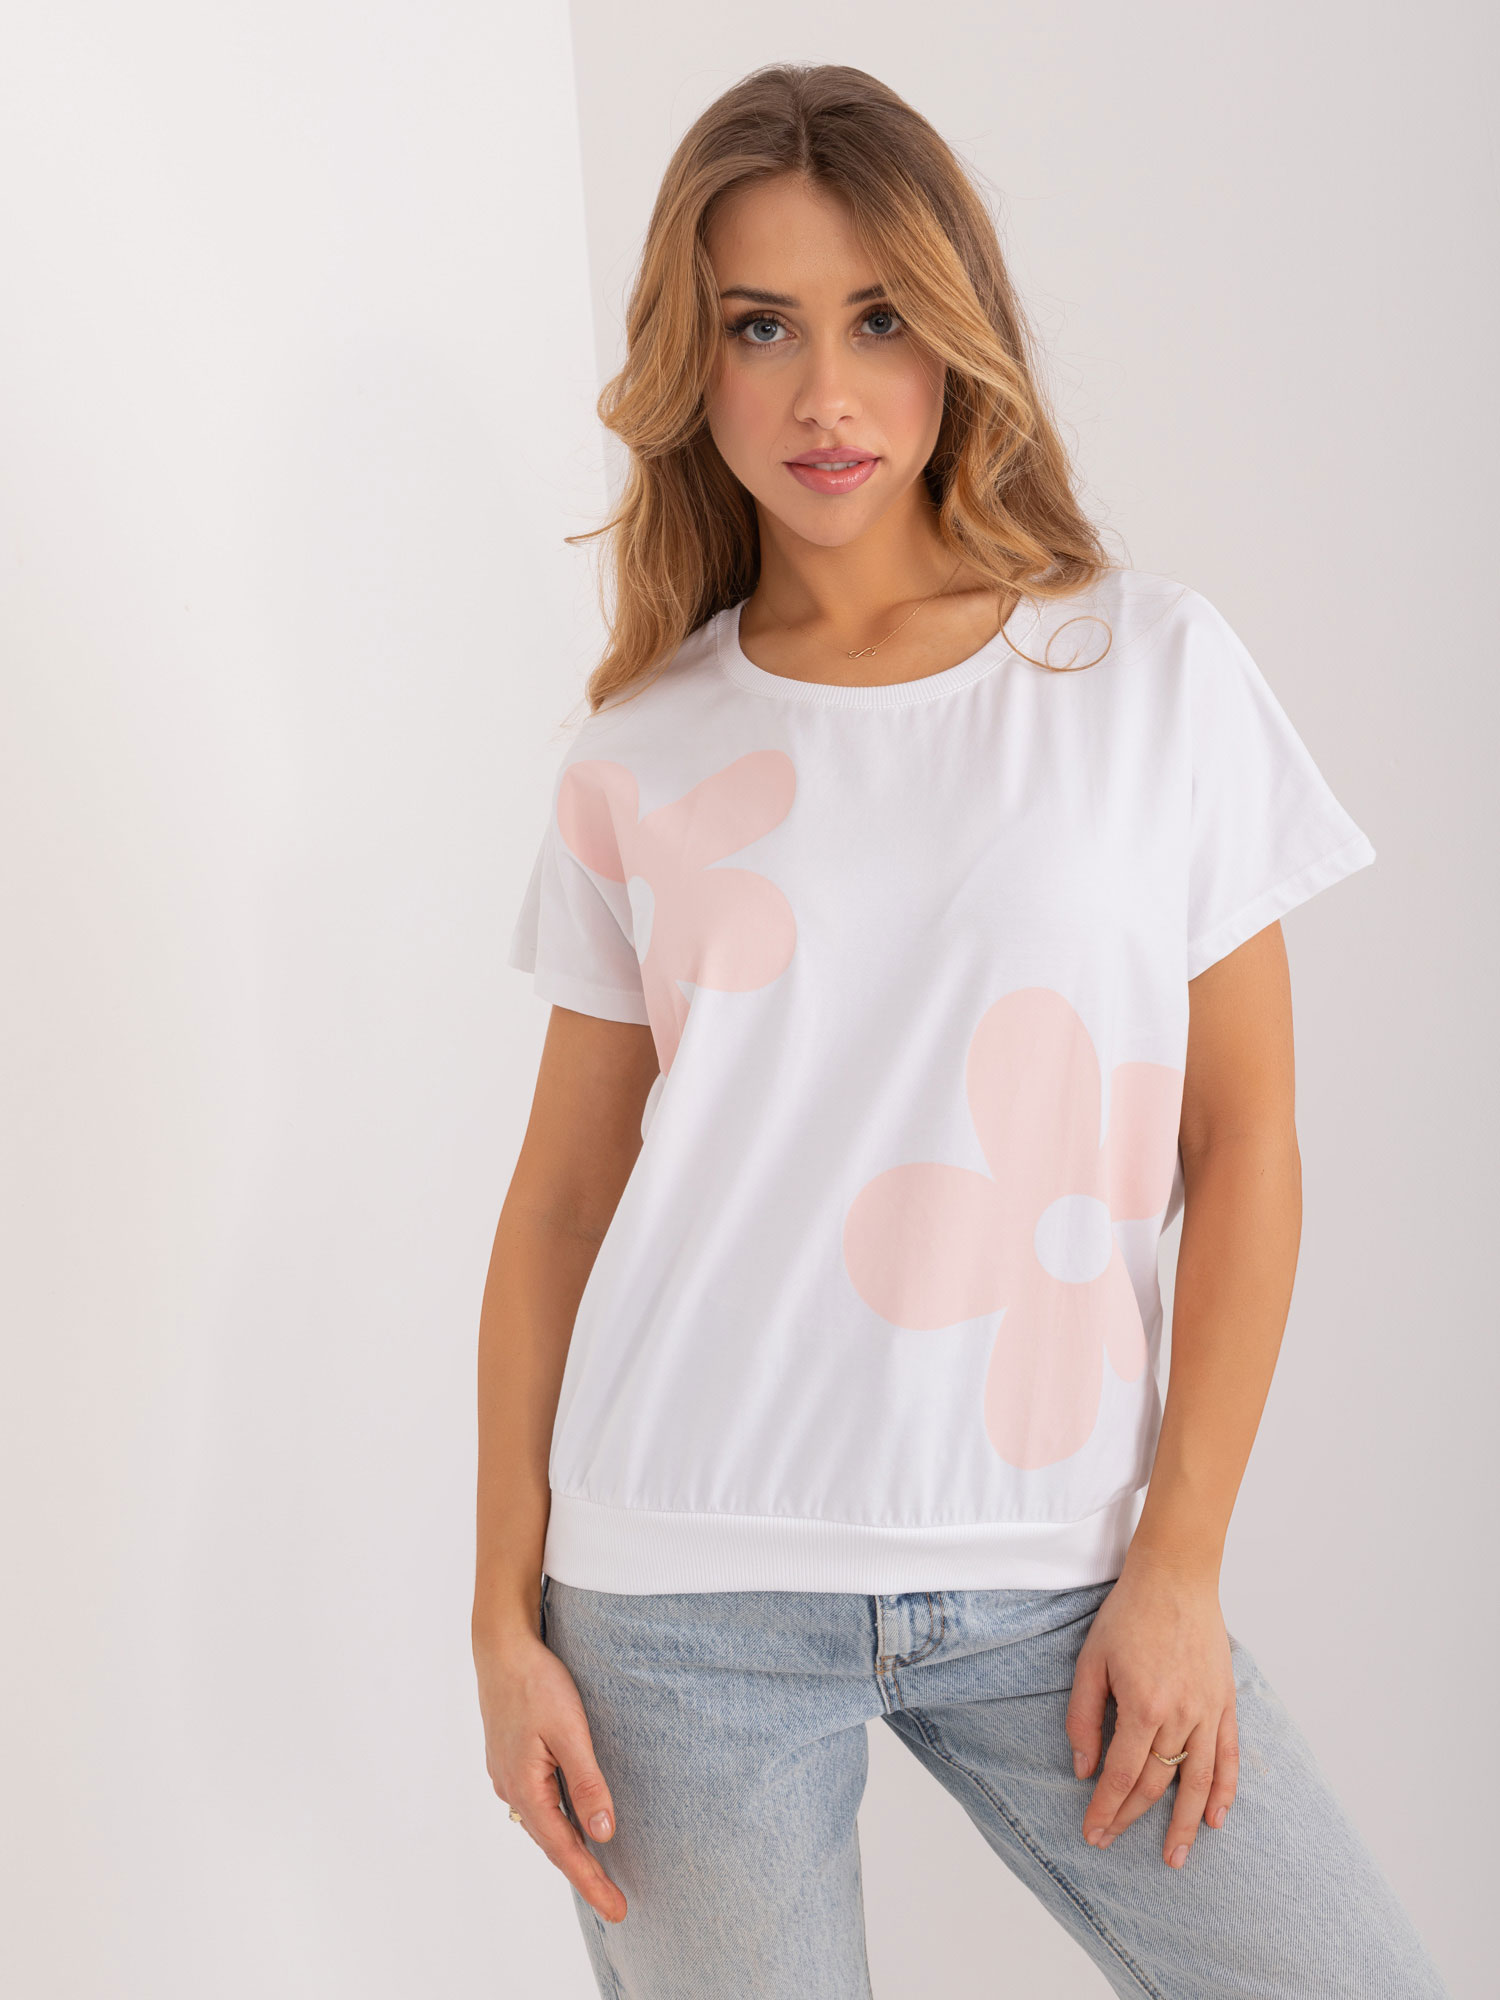 Bílo-růžové tričko s aplikací -RV-BZ-9628.26X-white-pink Velikost: S/M